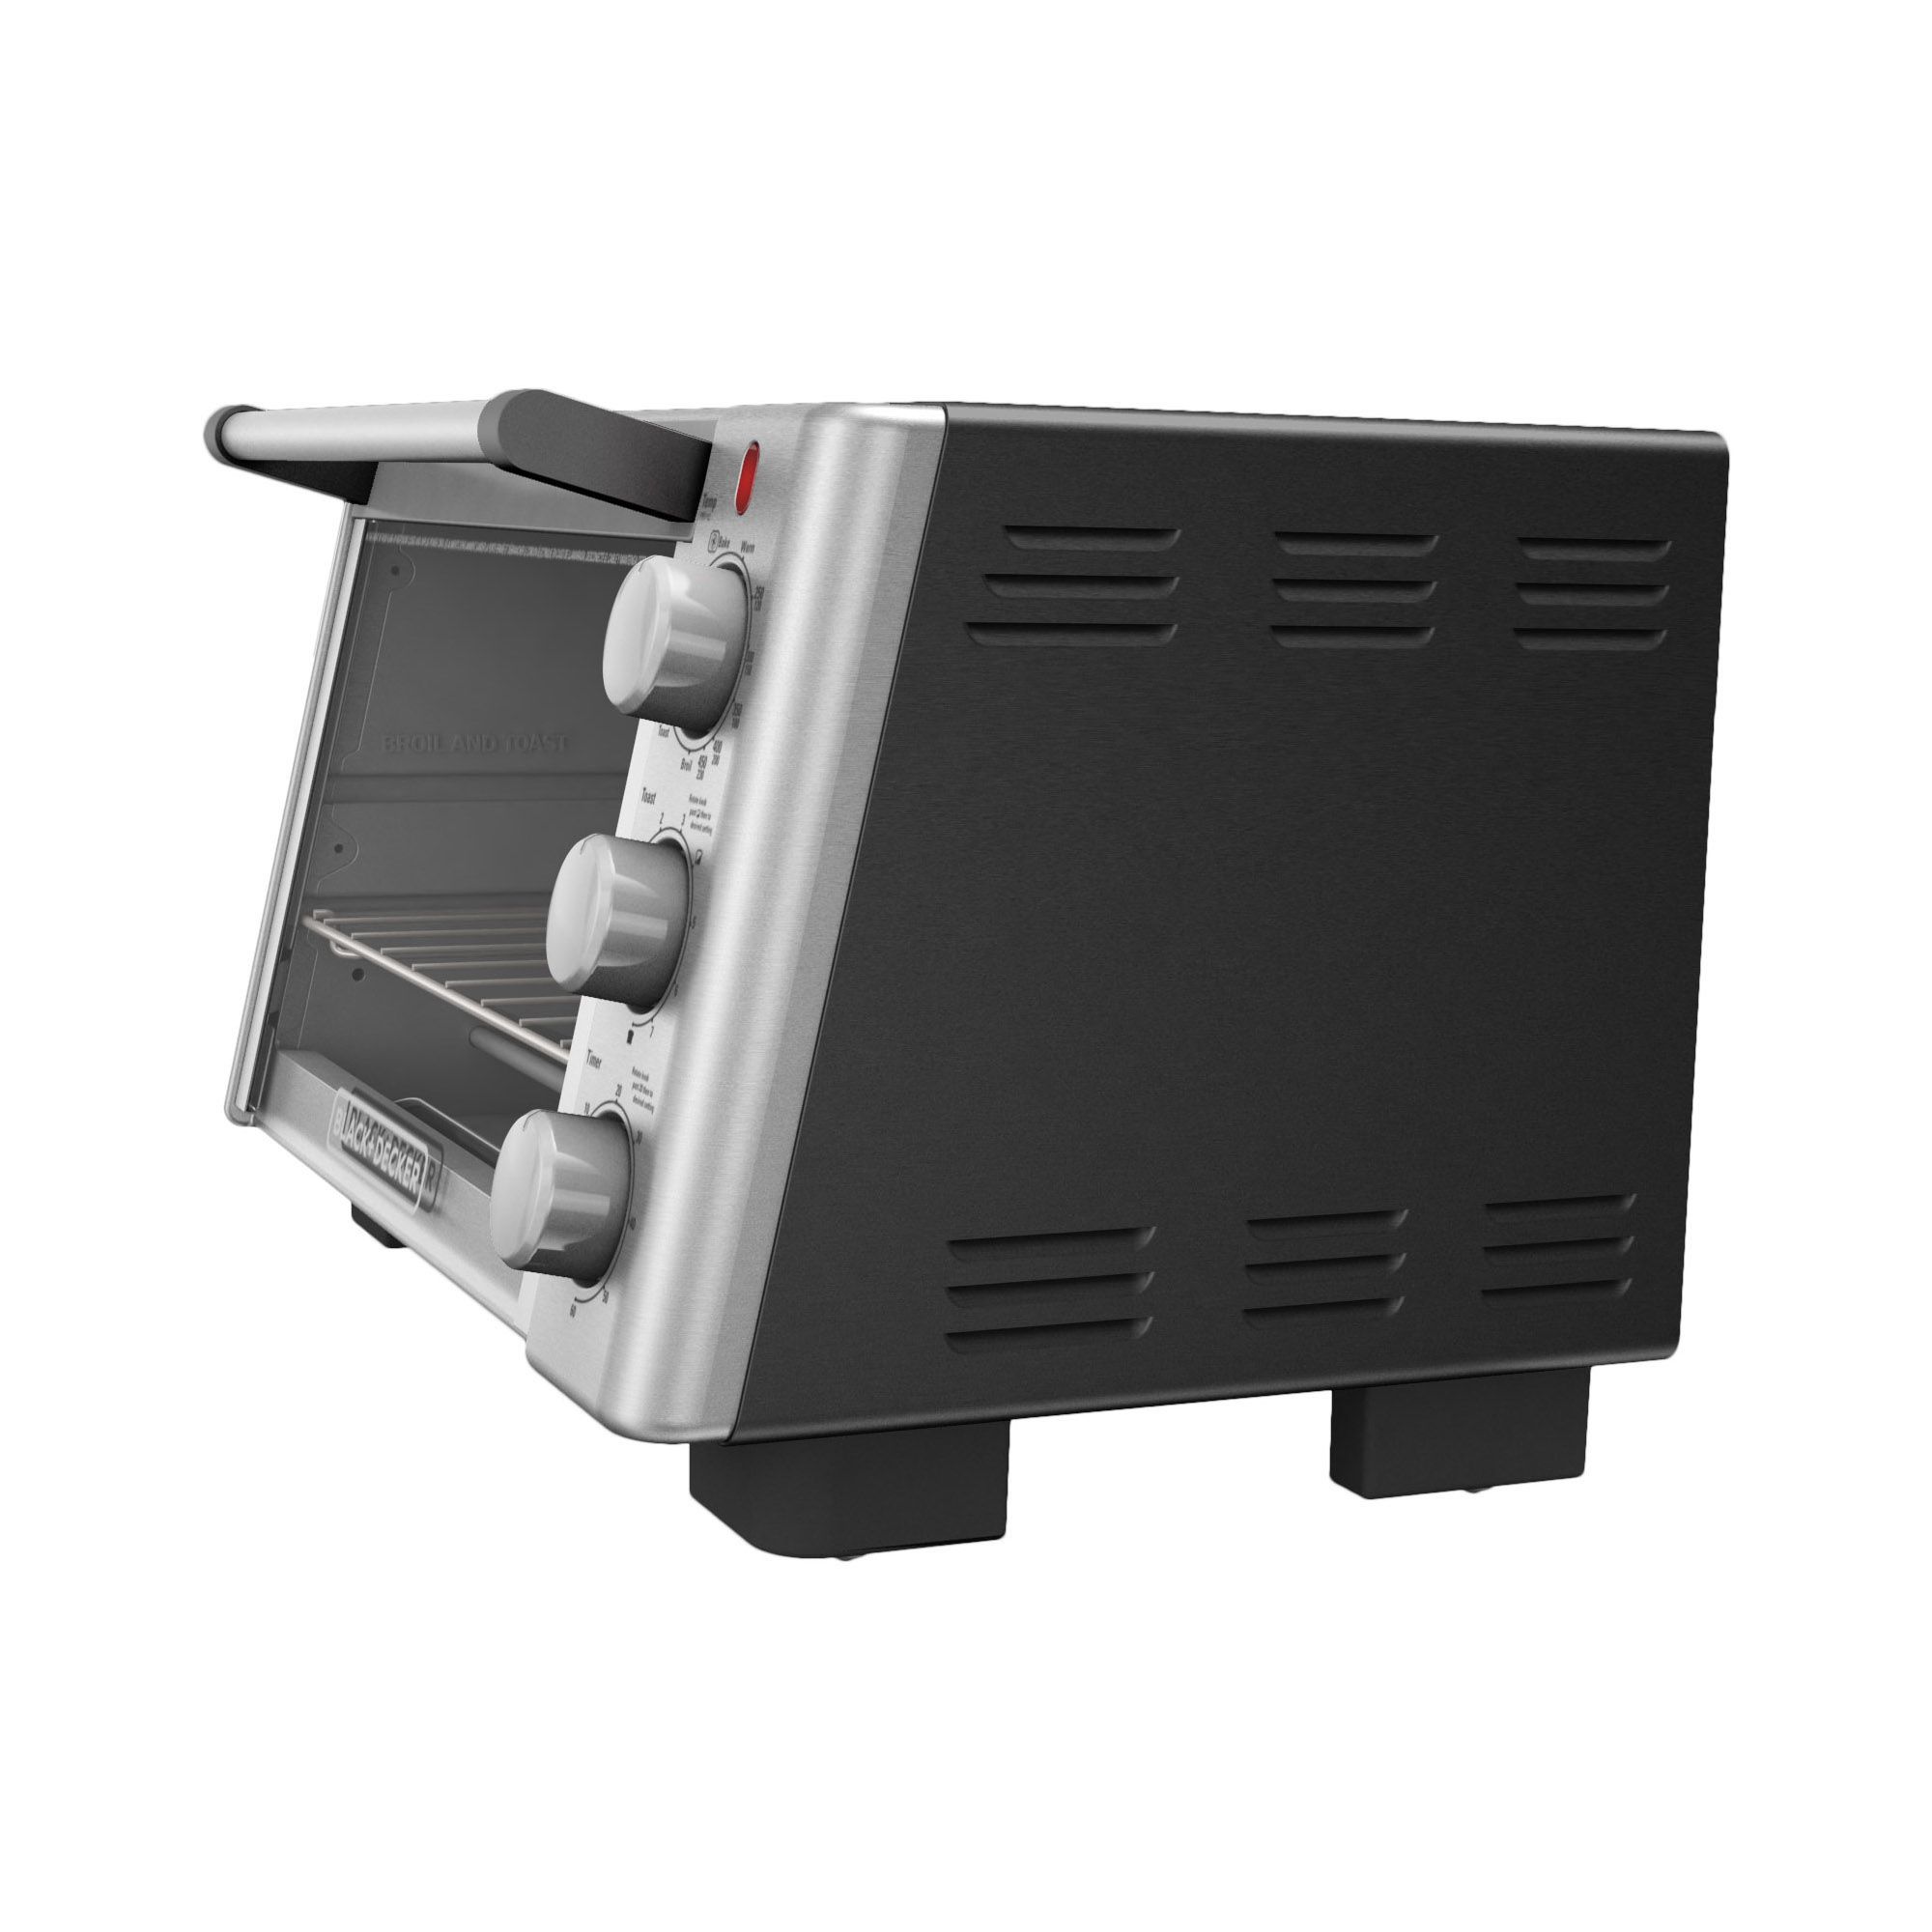 Black+decker To3000g 6-Slice Convection Countertop Toaster Oven - Silver